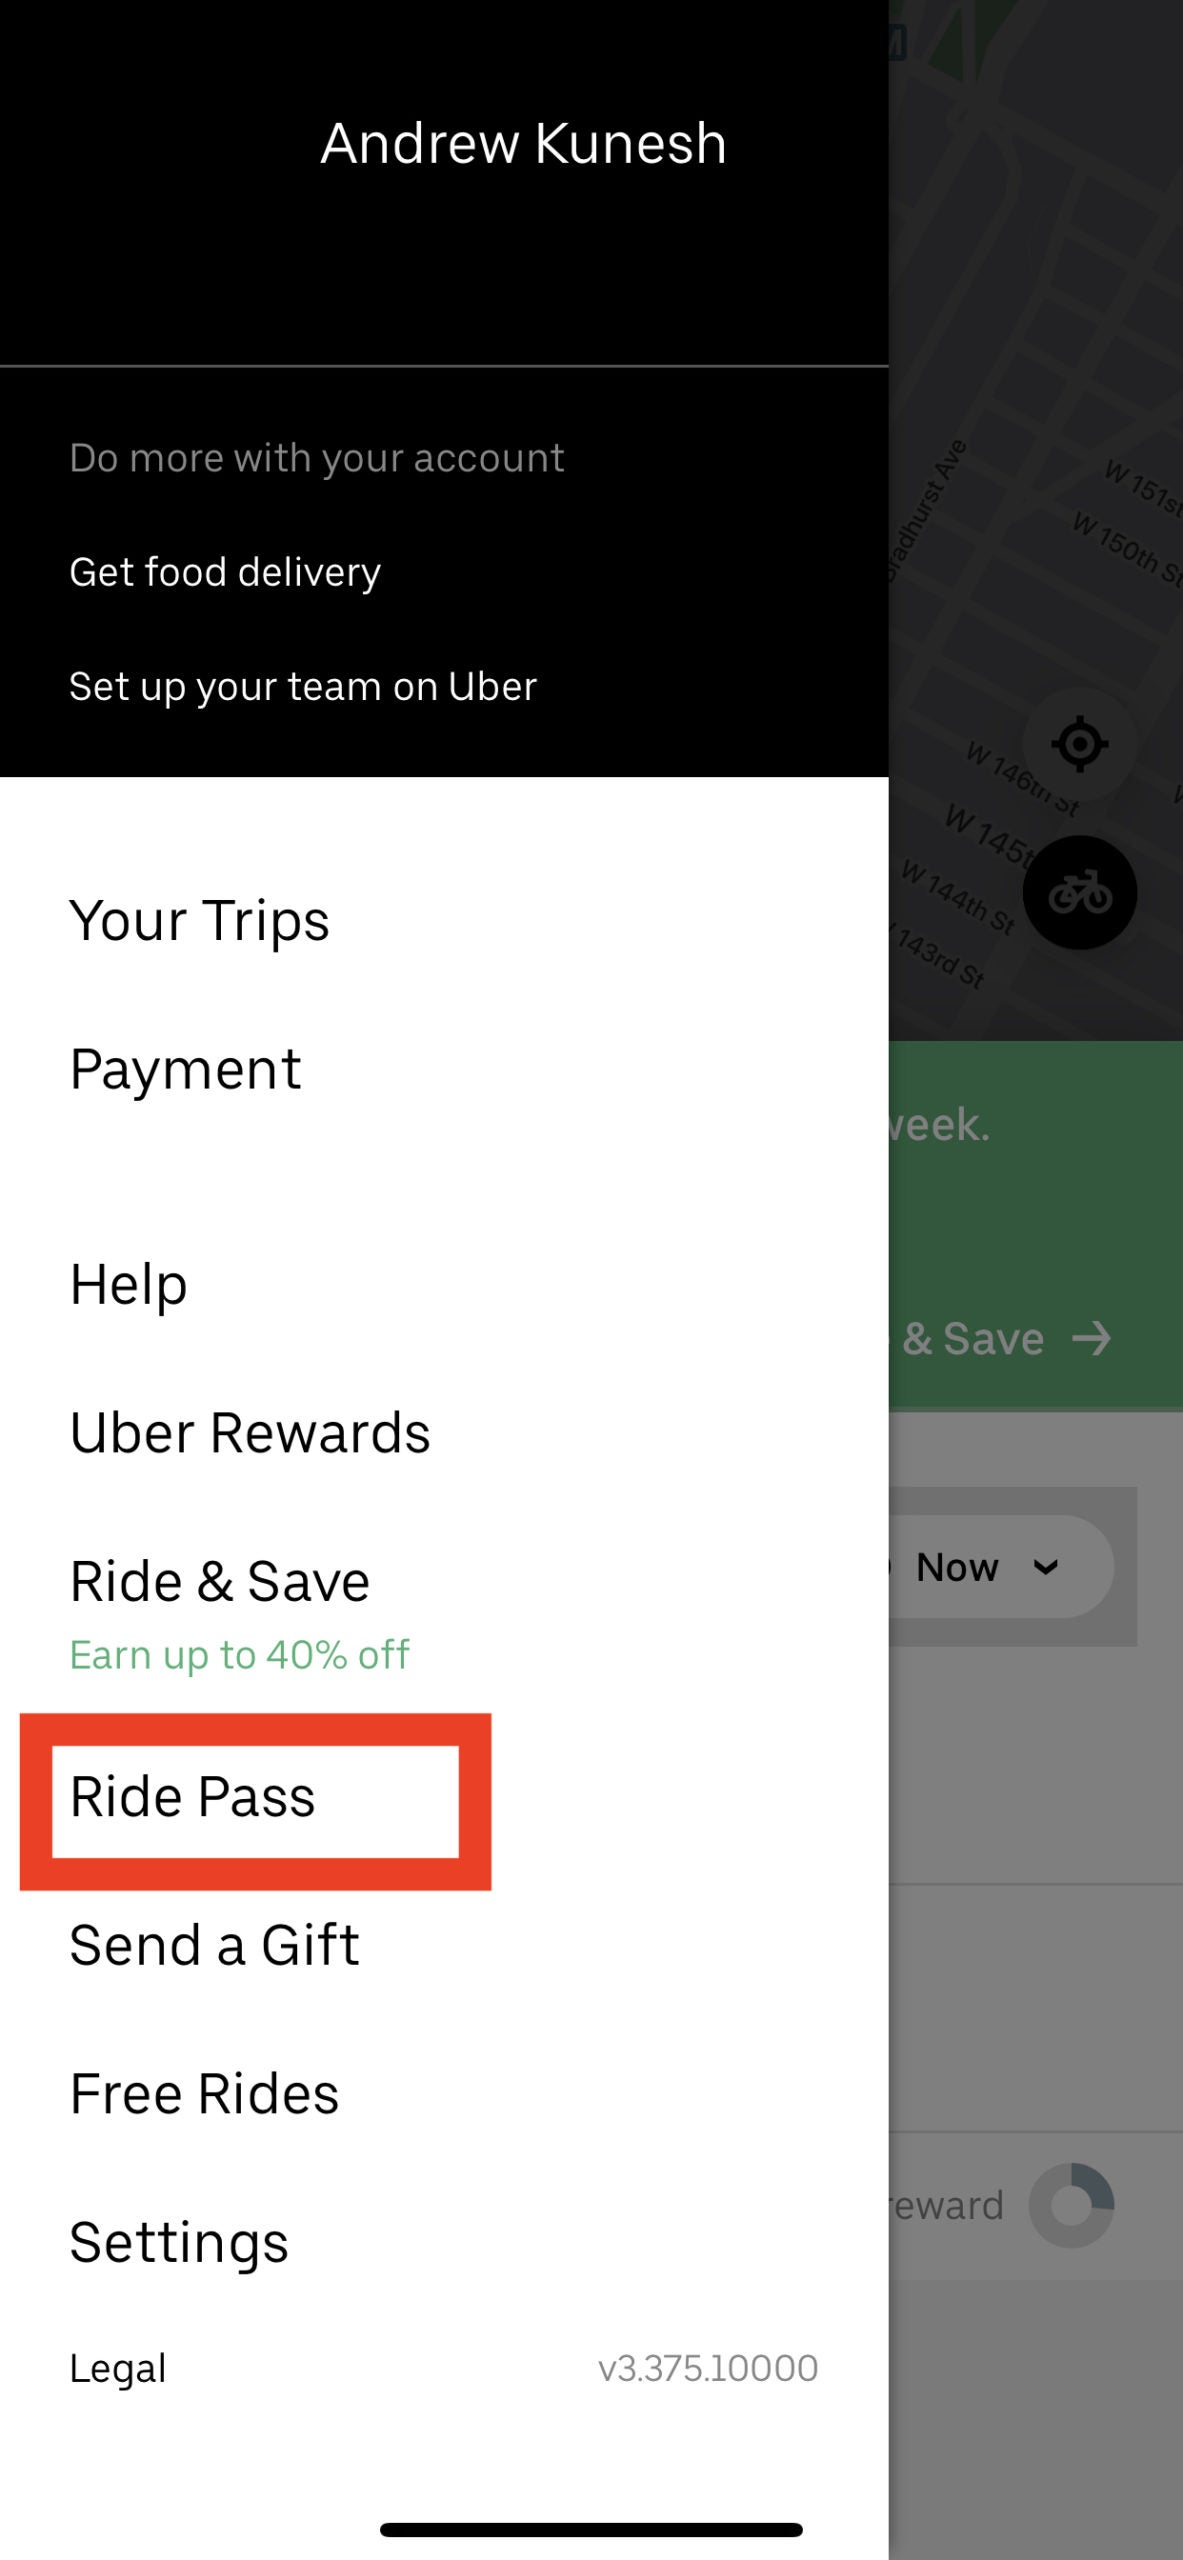 Buying an Uber Ride Pass